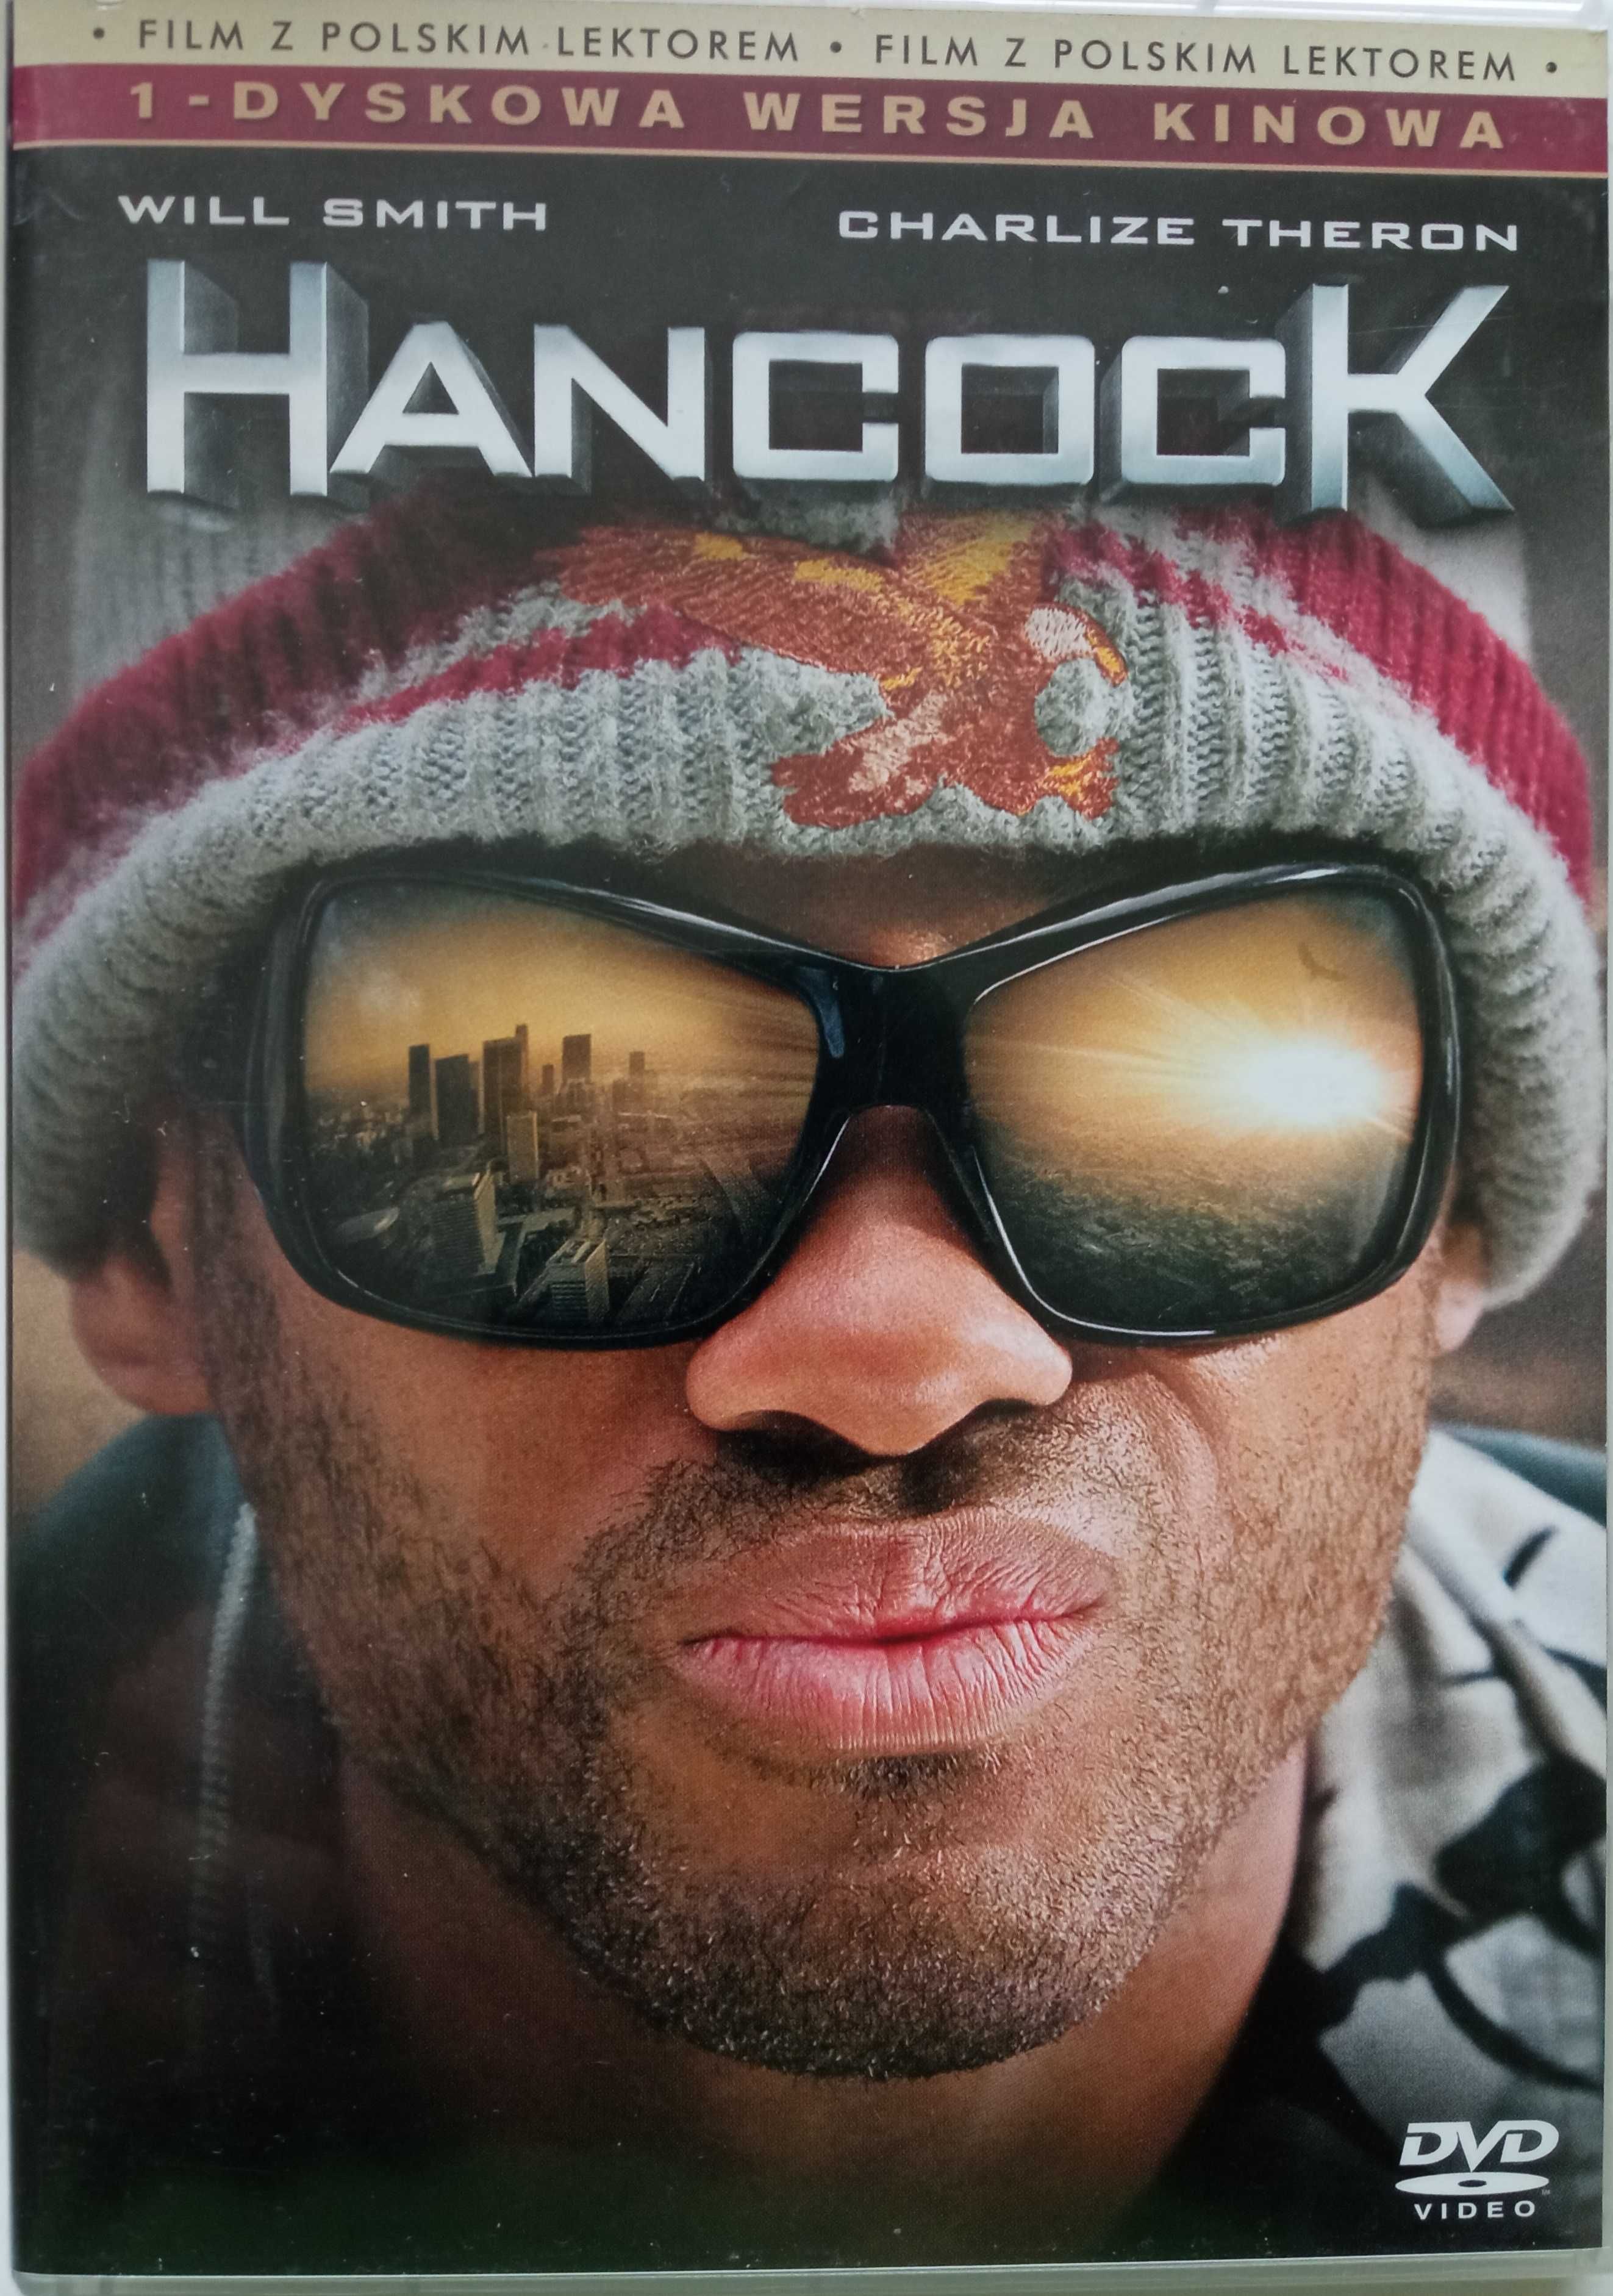 Hancock DVD Will Smith, Charlize Theron